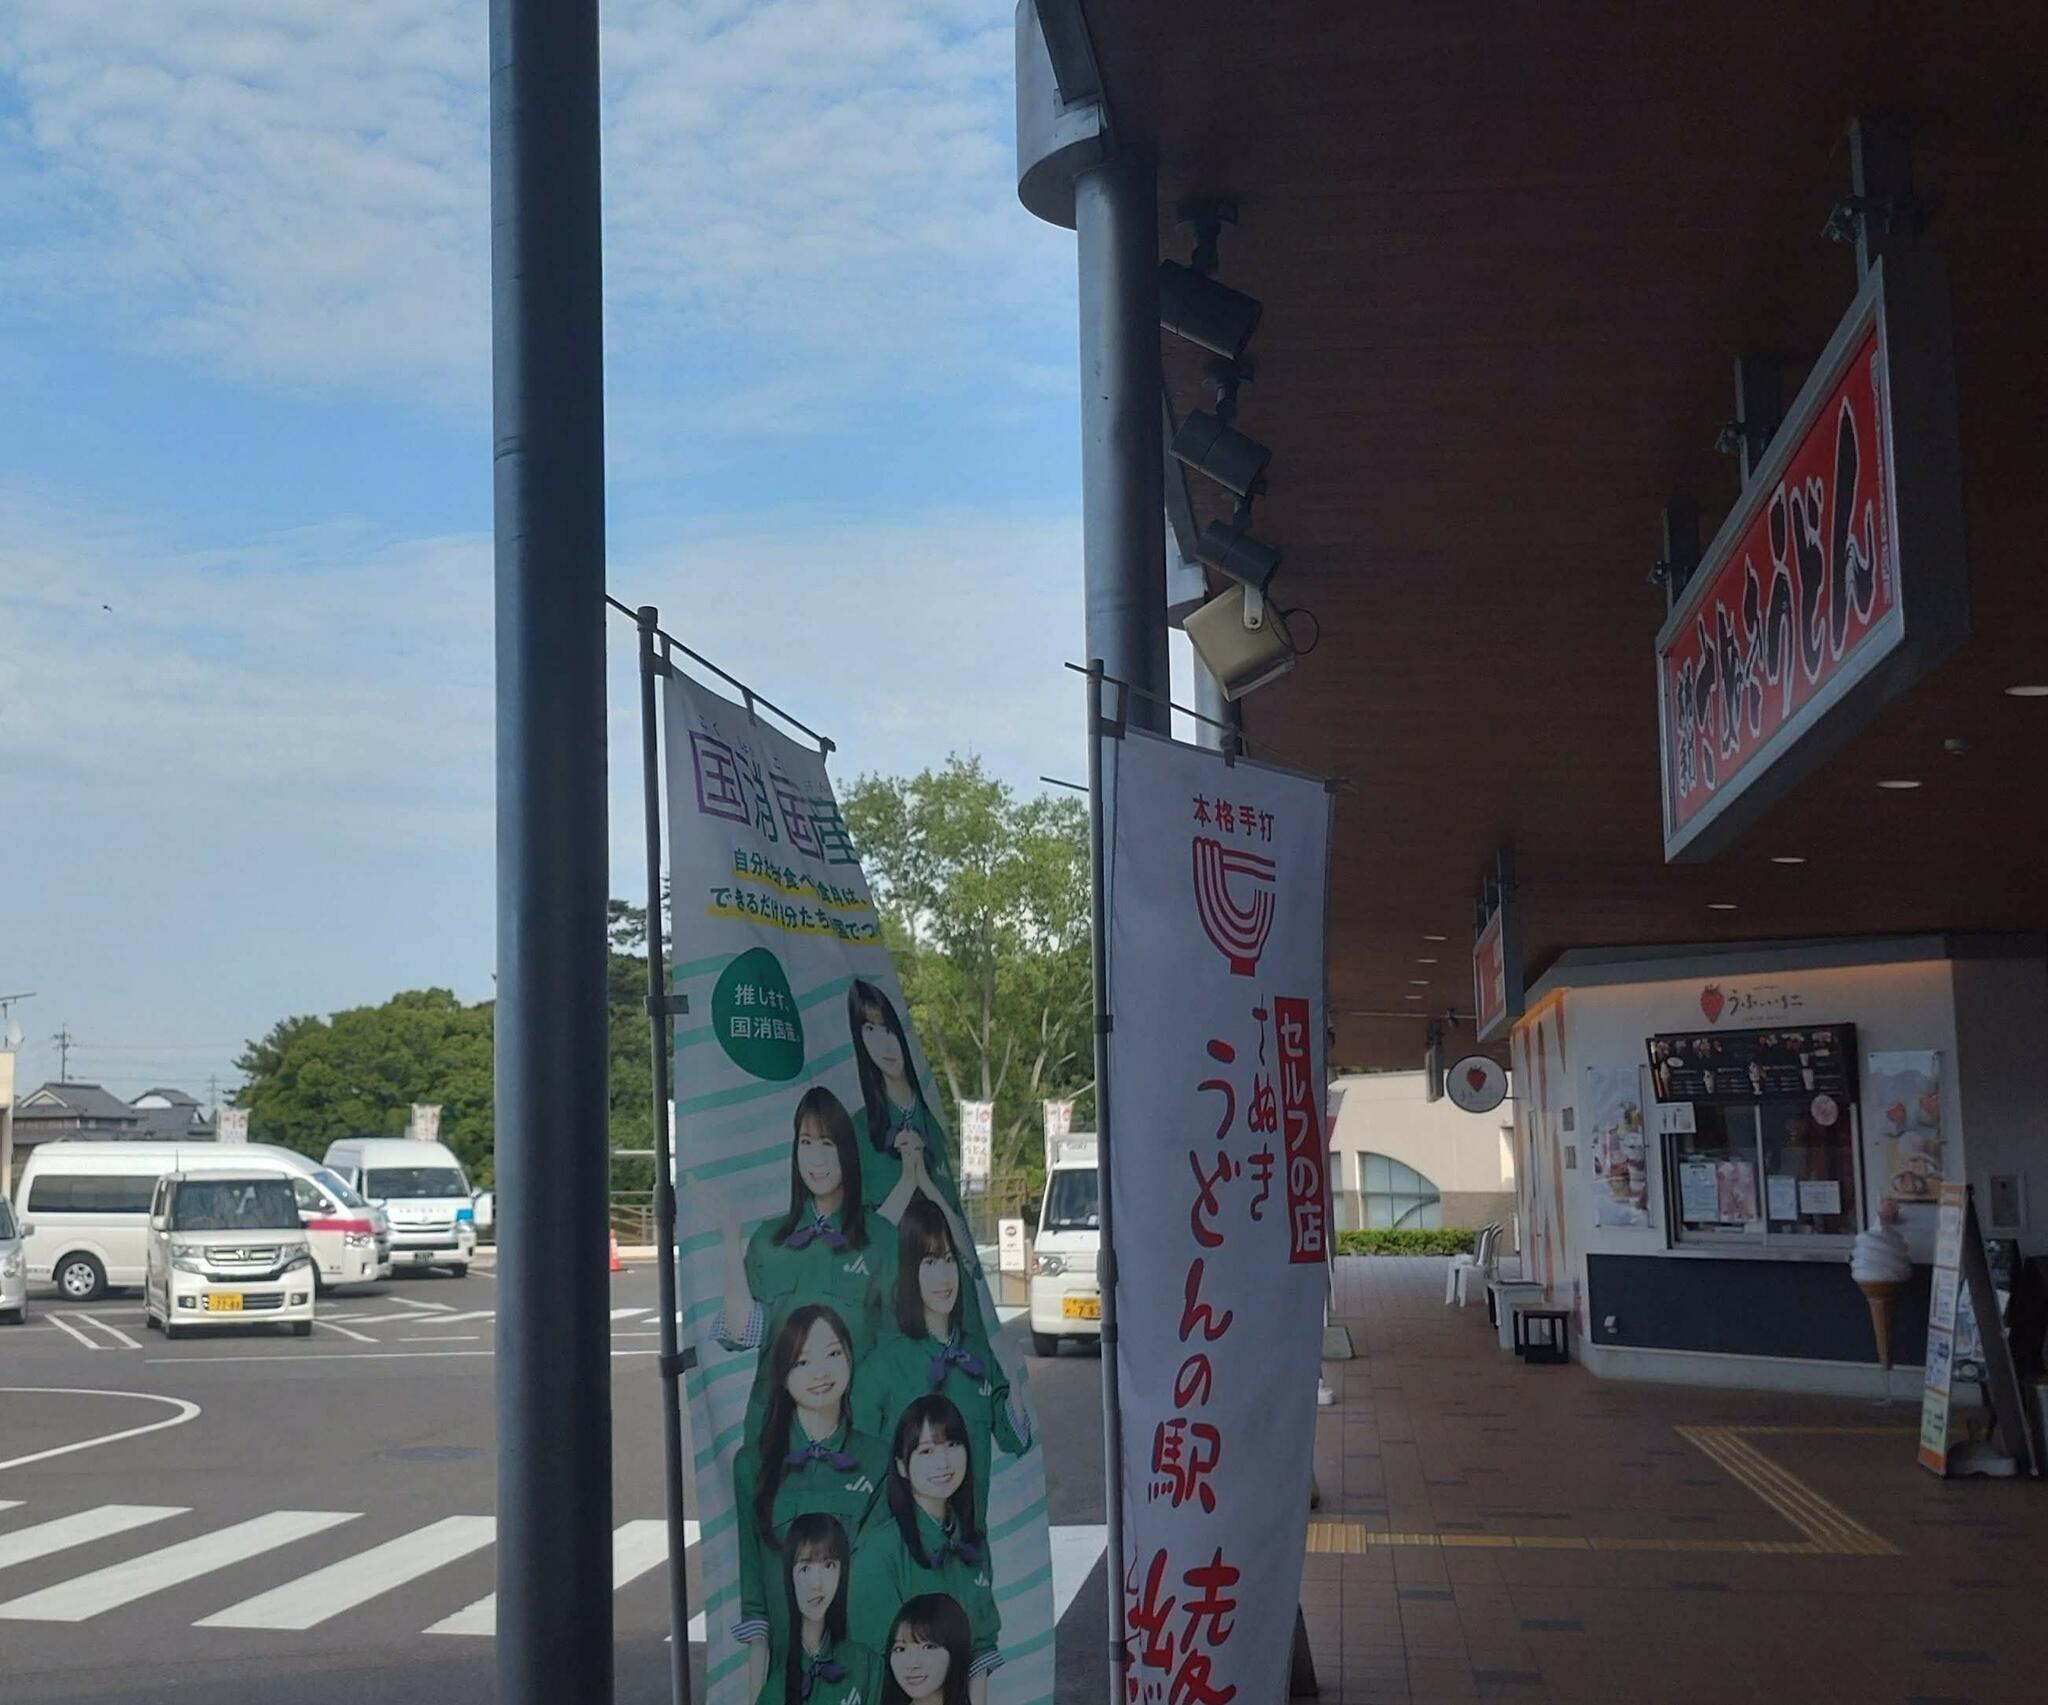 JA直売所 ファーマーズマーケット 讃さん広場滝宮店の代表写真4